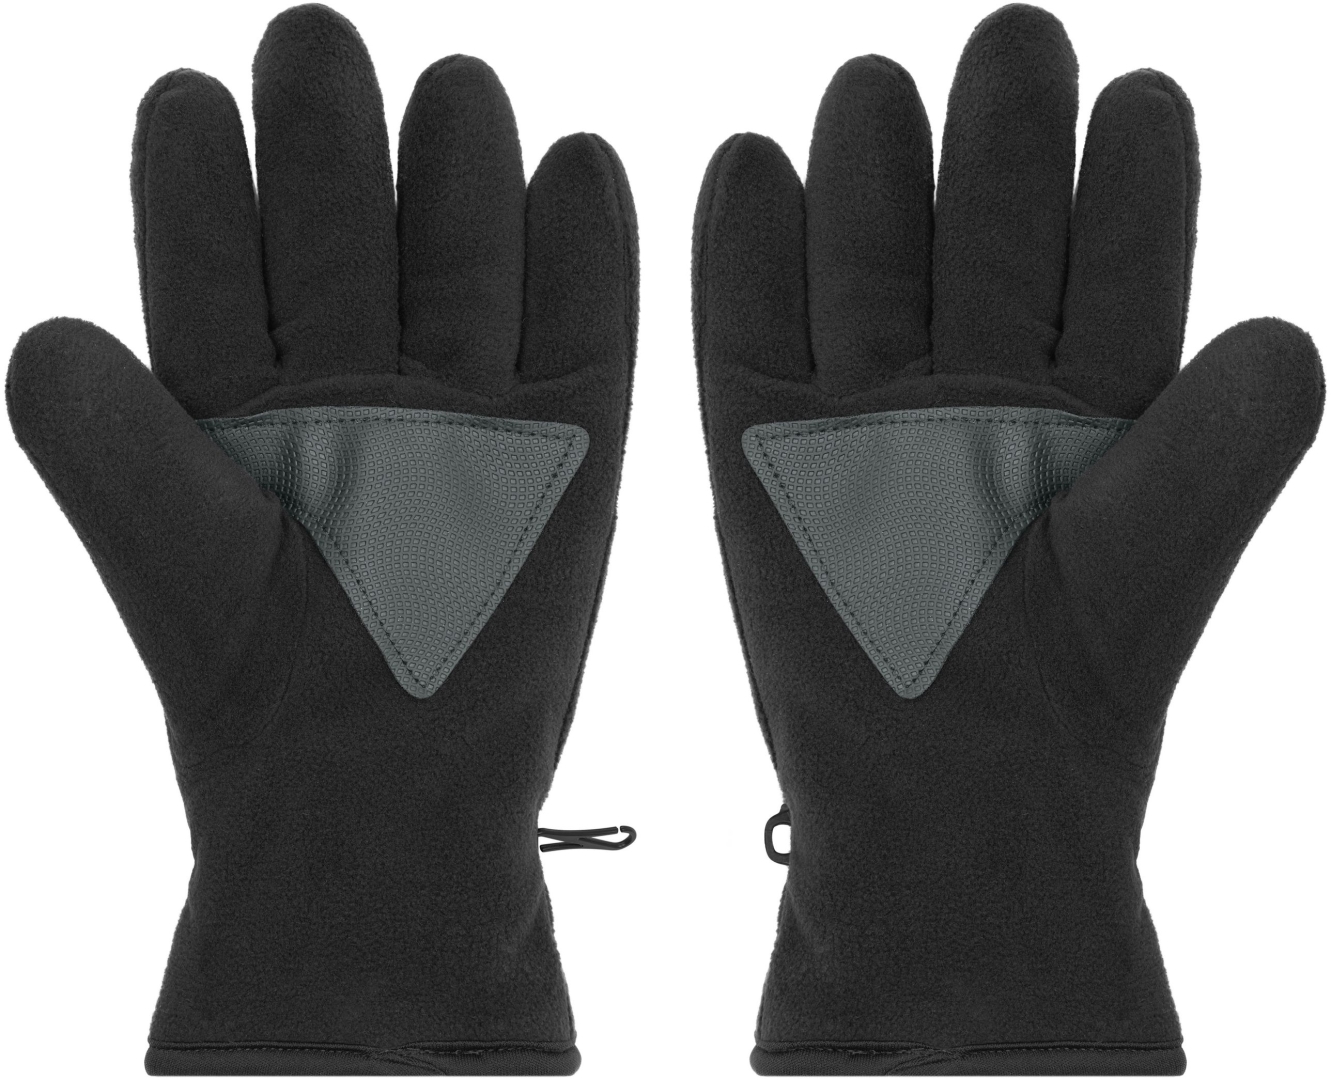 Thinsulate Fleece Gloves